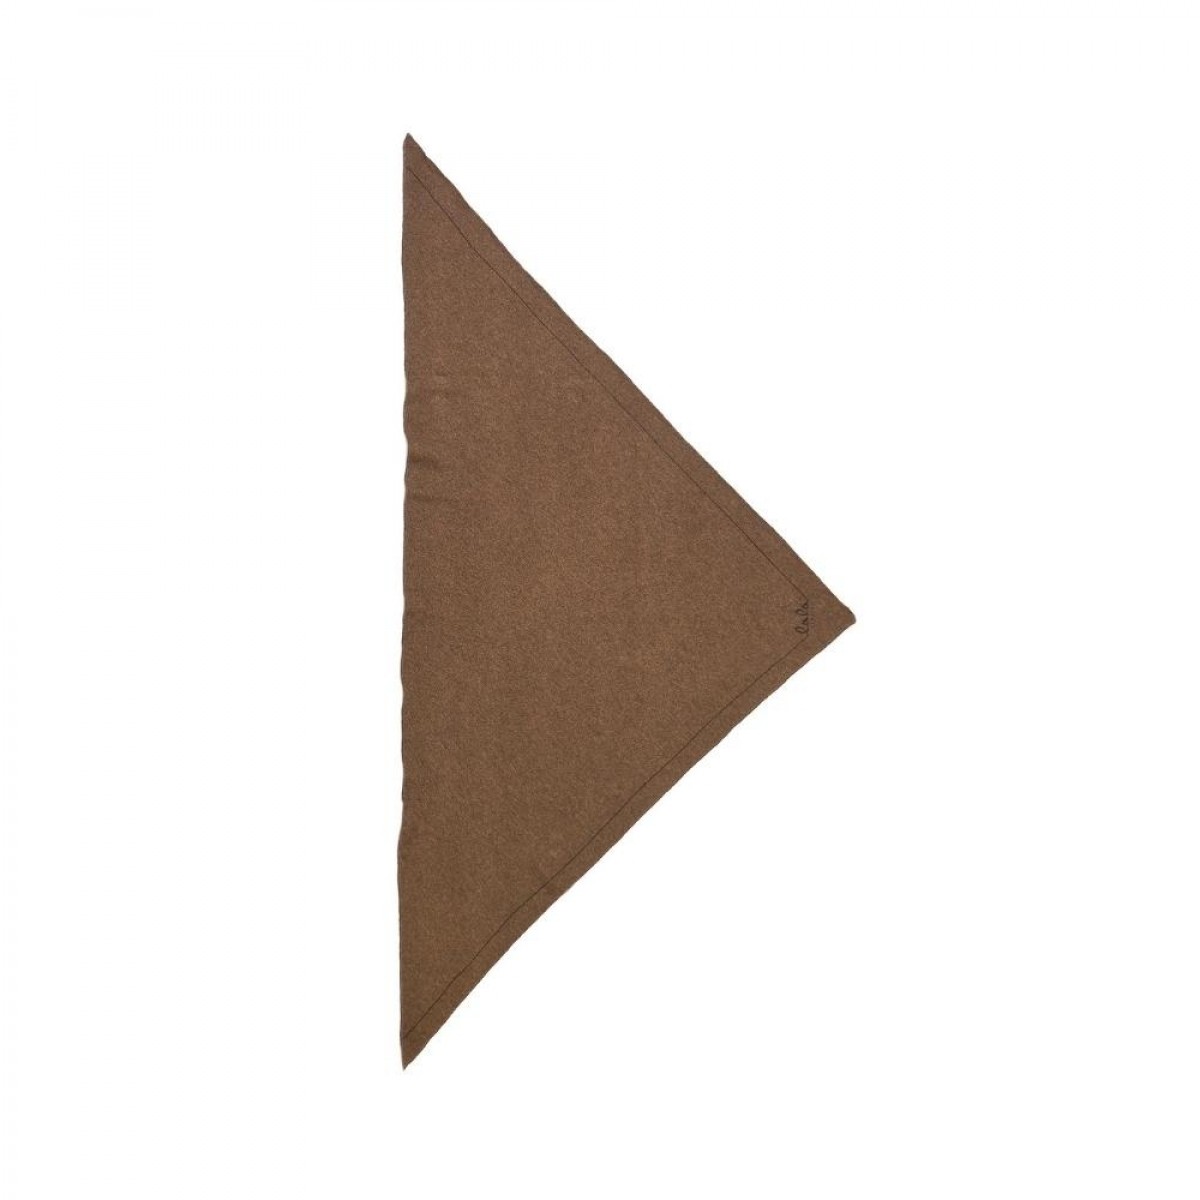 triangle solid logo m - dark brown - front